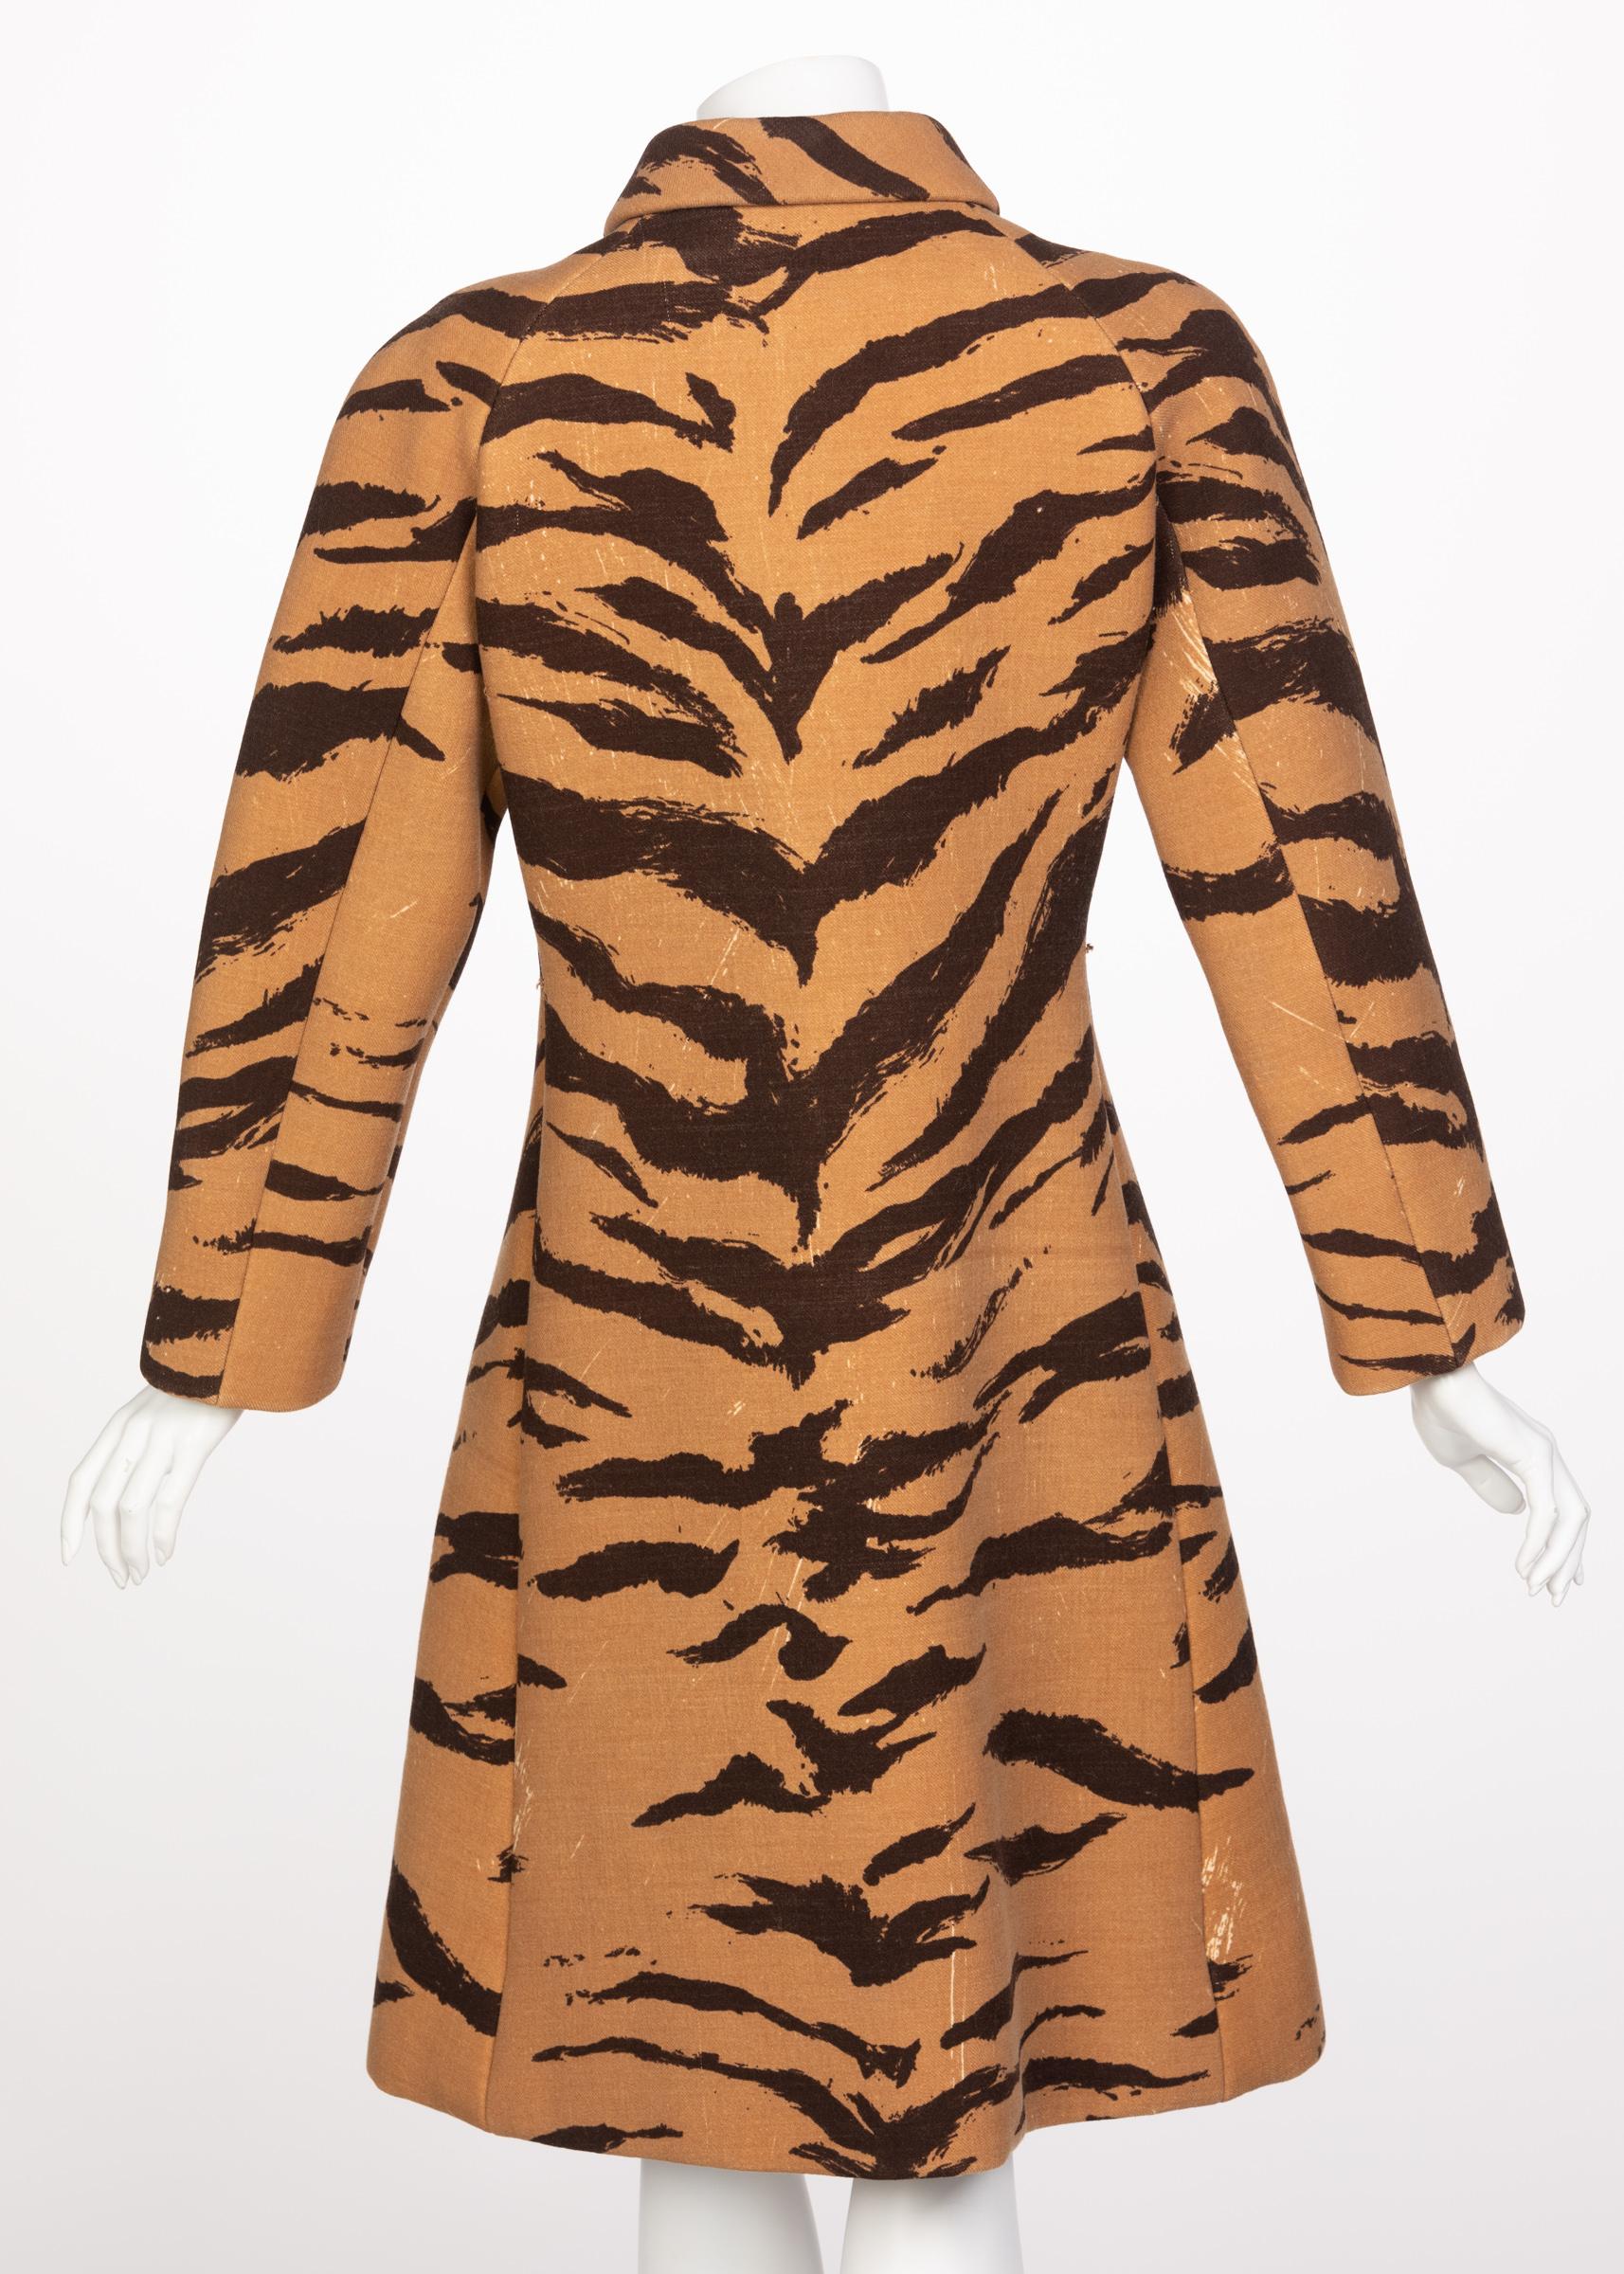 Women's Hubert de Givenchy 1969 Haute Couture Coat Tiger Print Coat  Documented